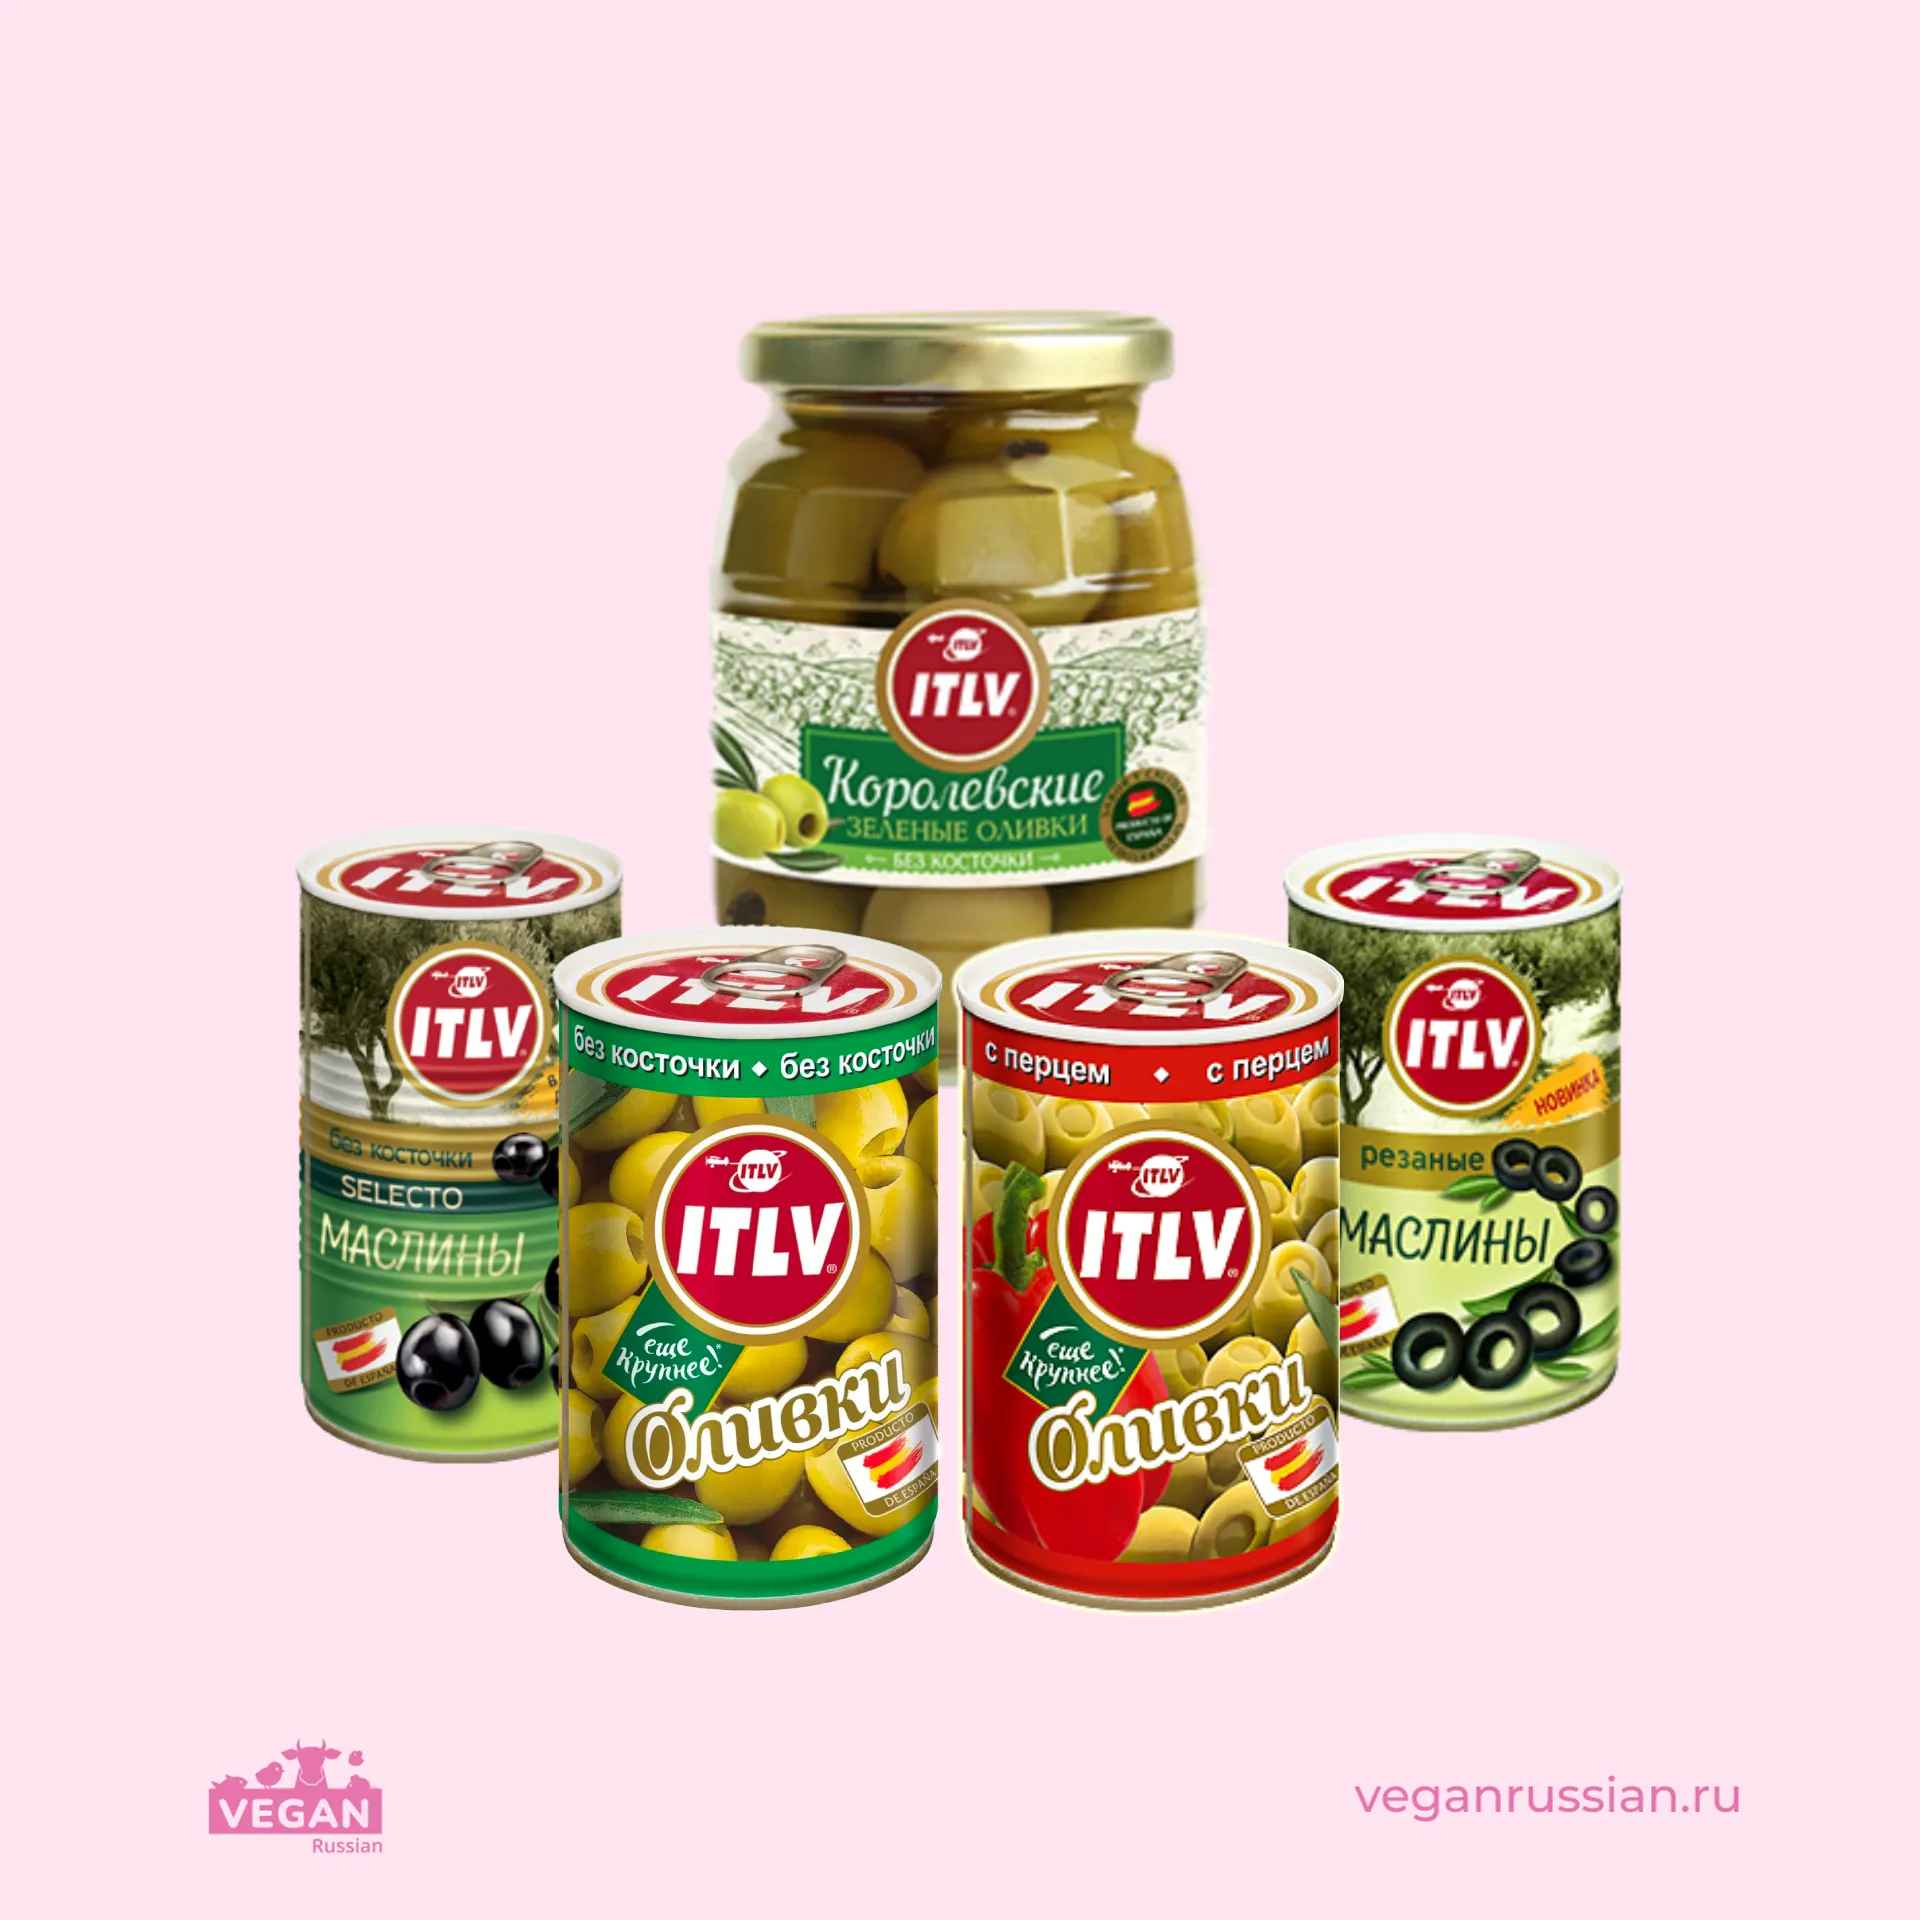 Оливки и маслины ITLV 300-350 г